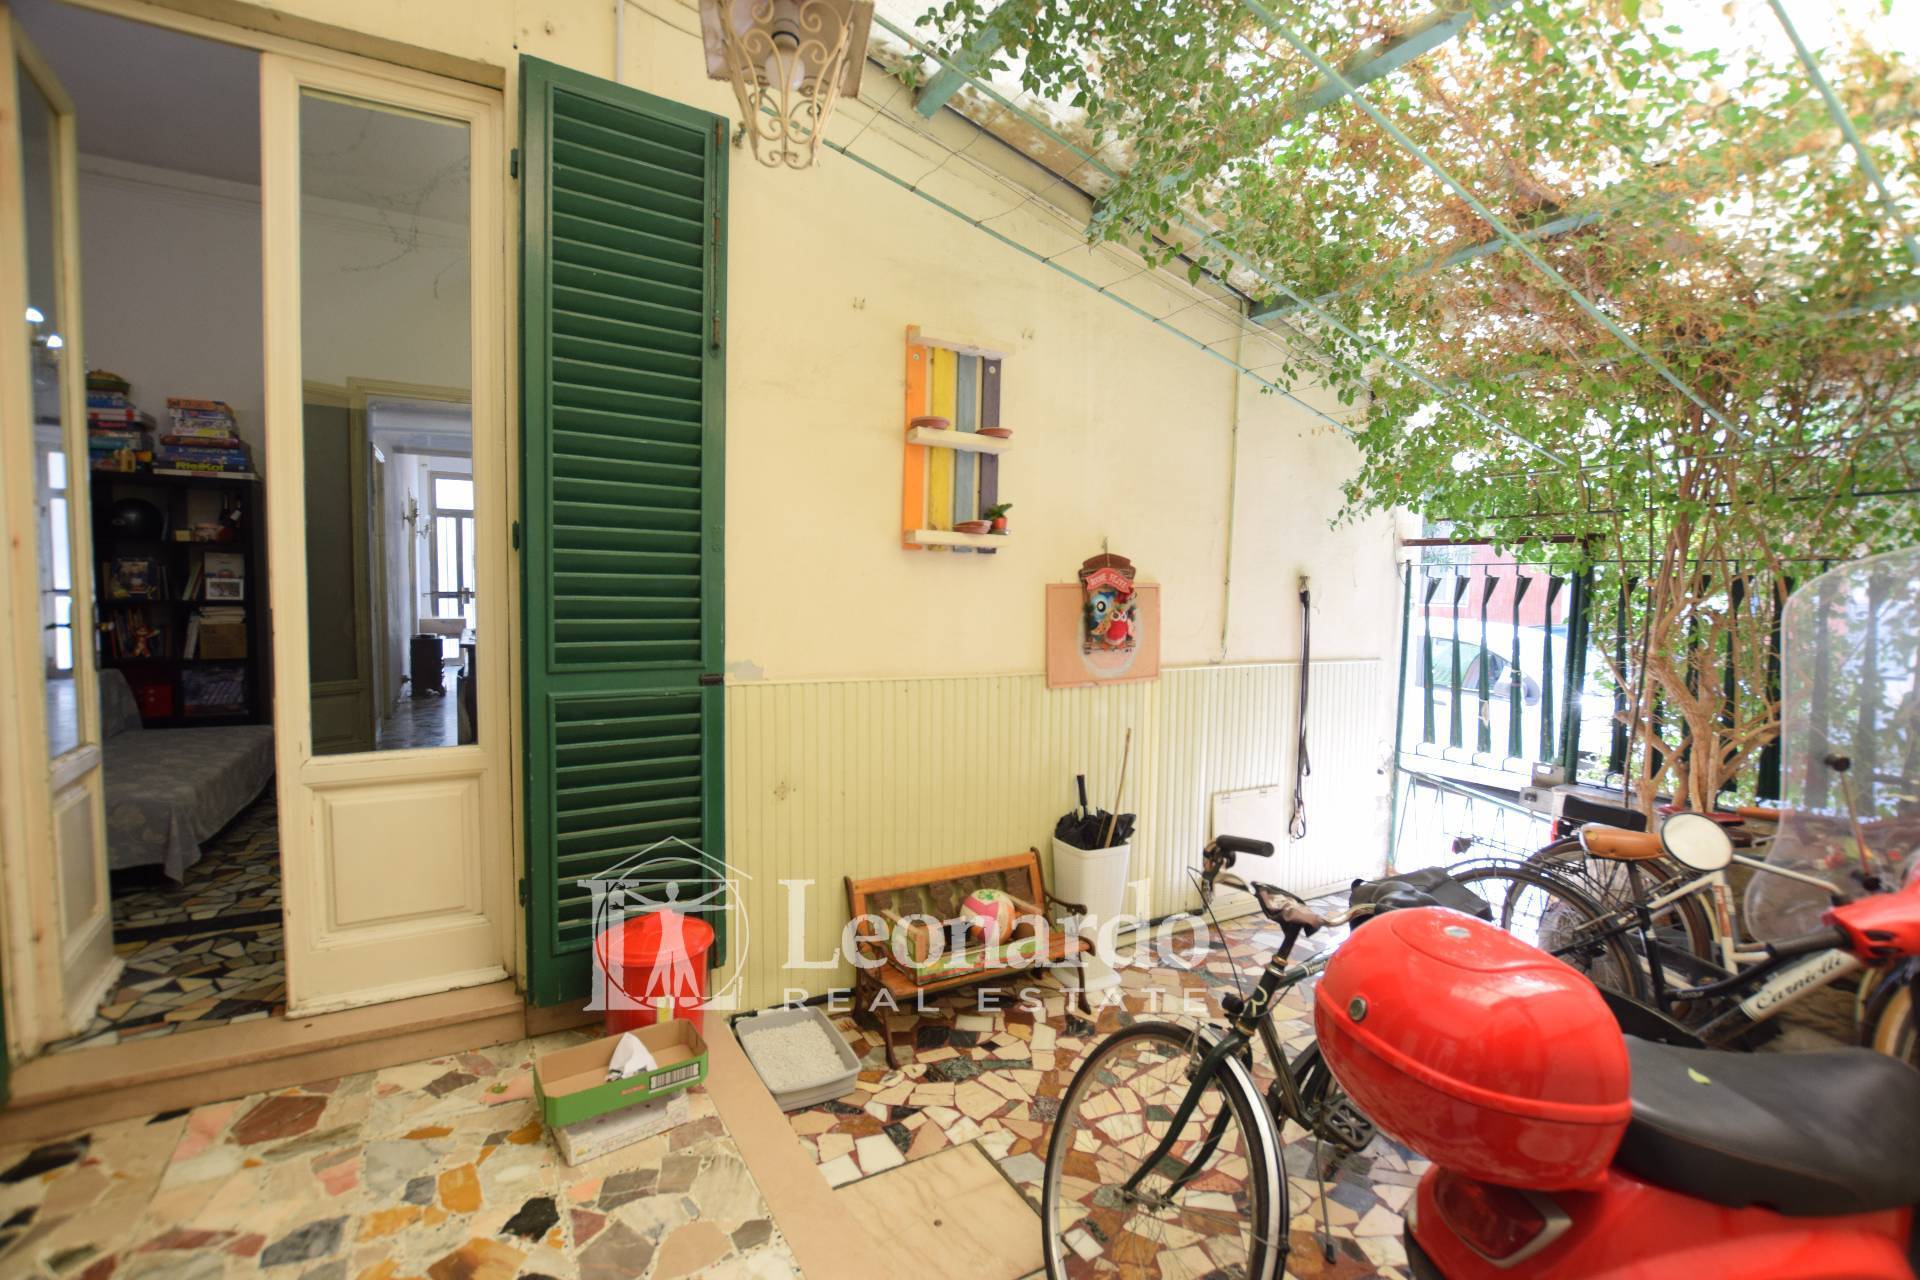 Casa indipendente in vendita, Viareggio marco polo, don bosco